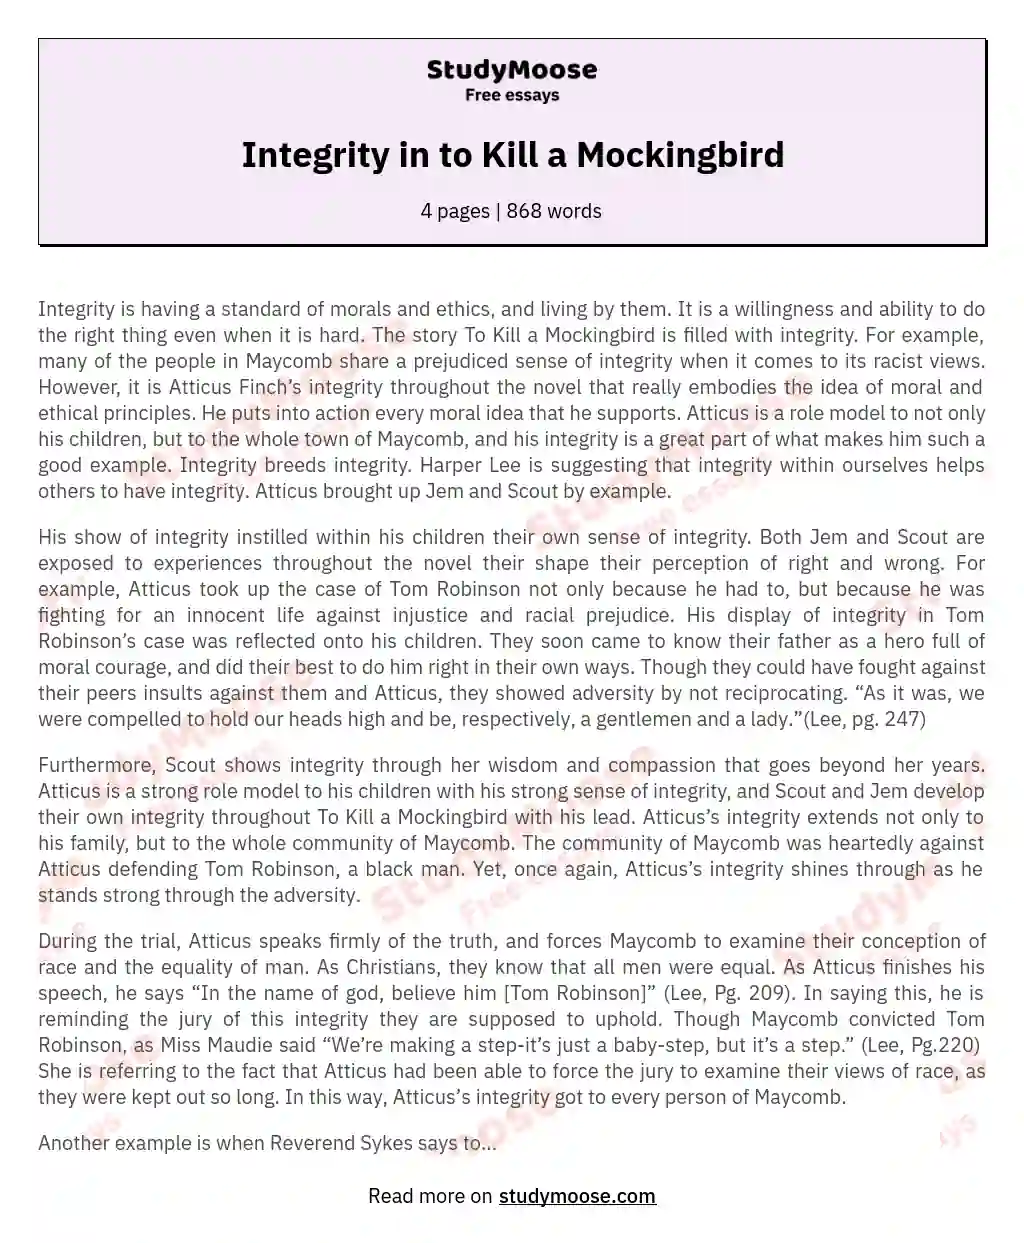 Integrity in to Kill a Mockingbird essay